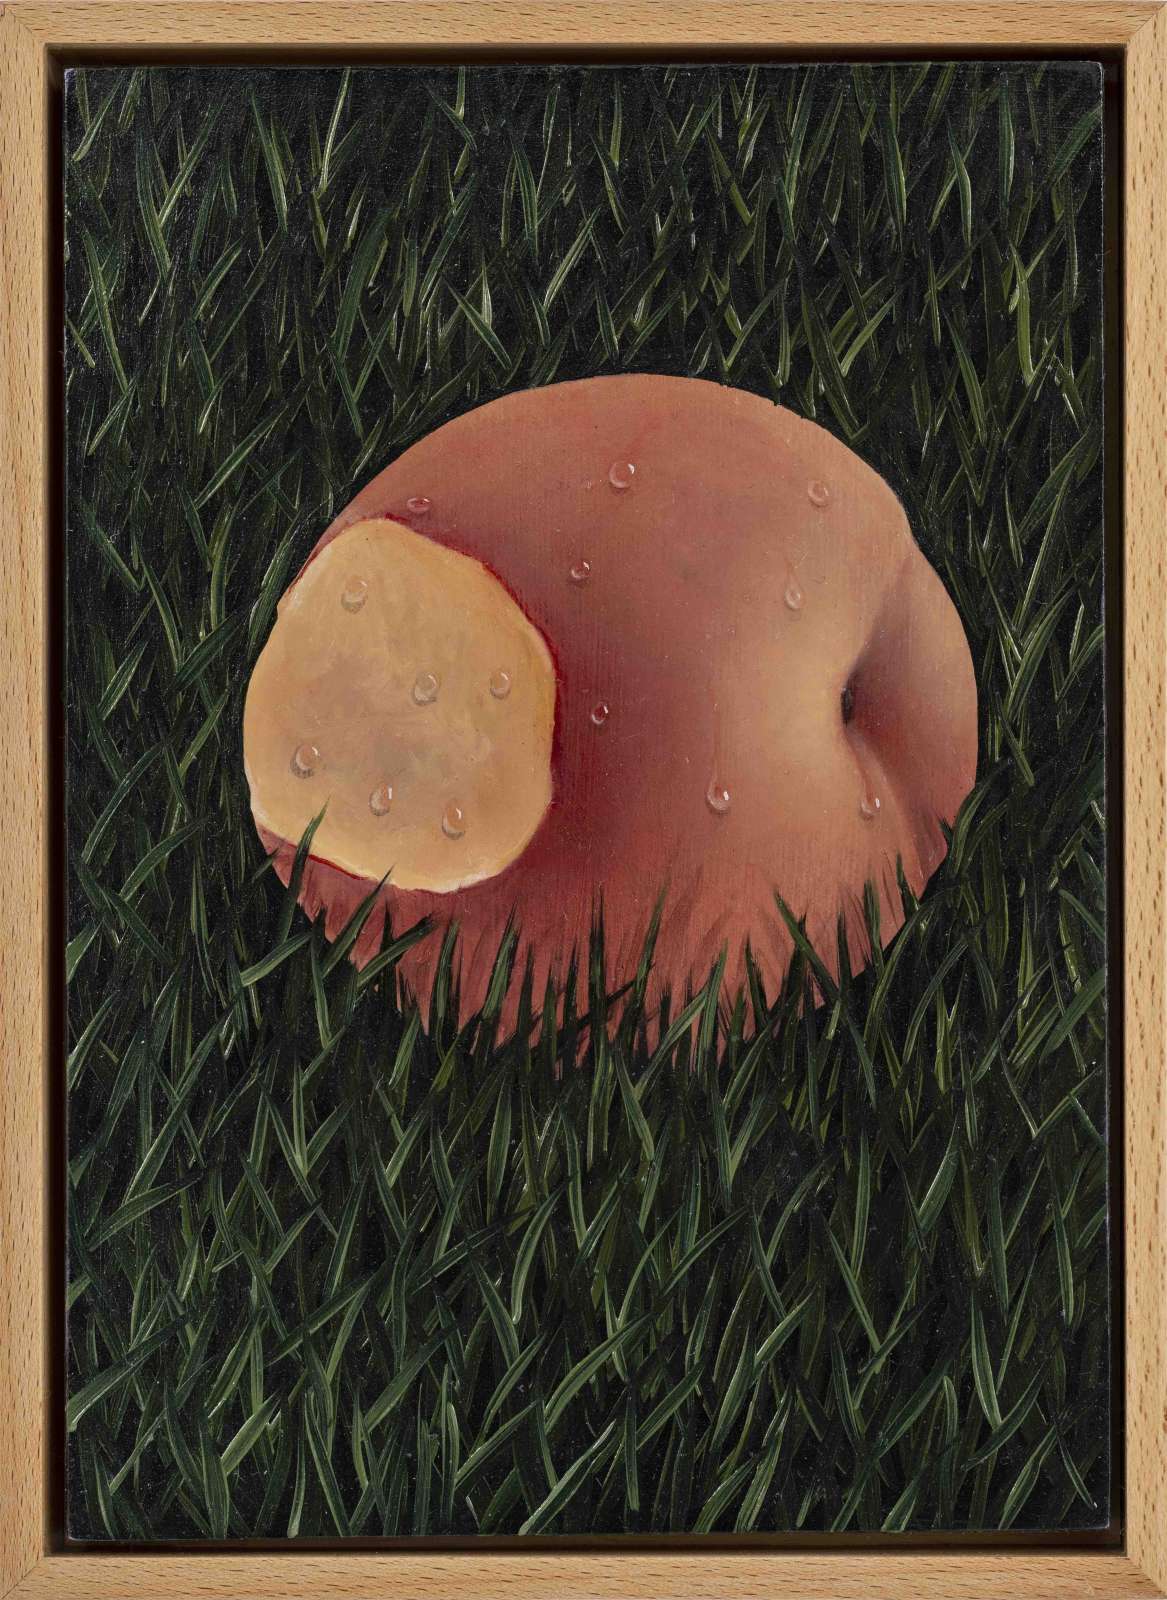 Natalia Gonzalez Martin, Four states of matter: Engraved, 2021, Oil on wood, 21 x 14 cm